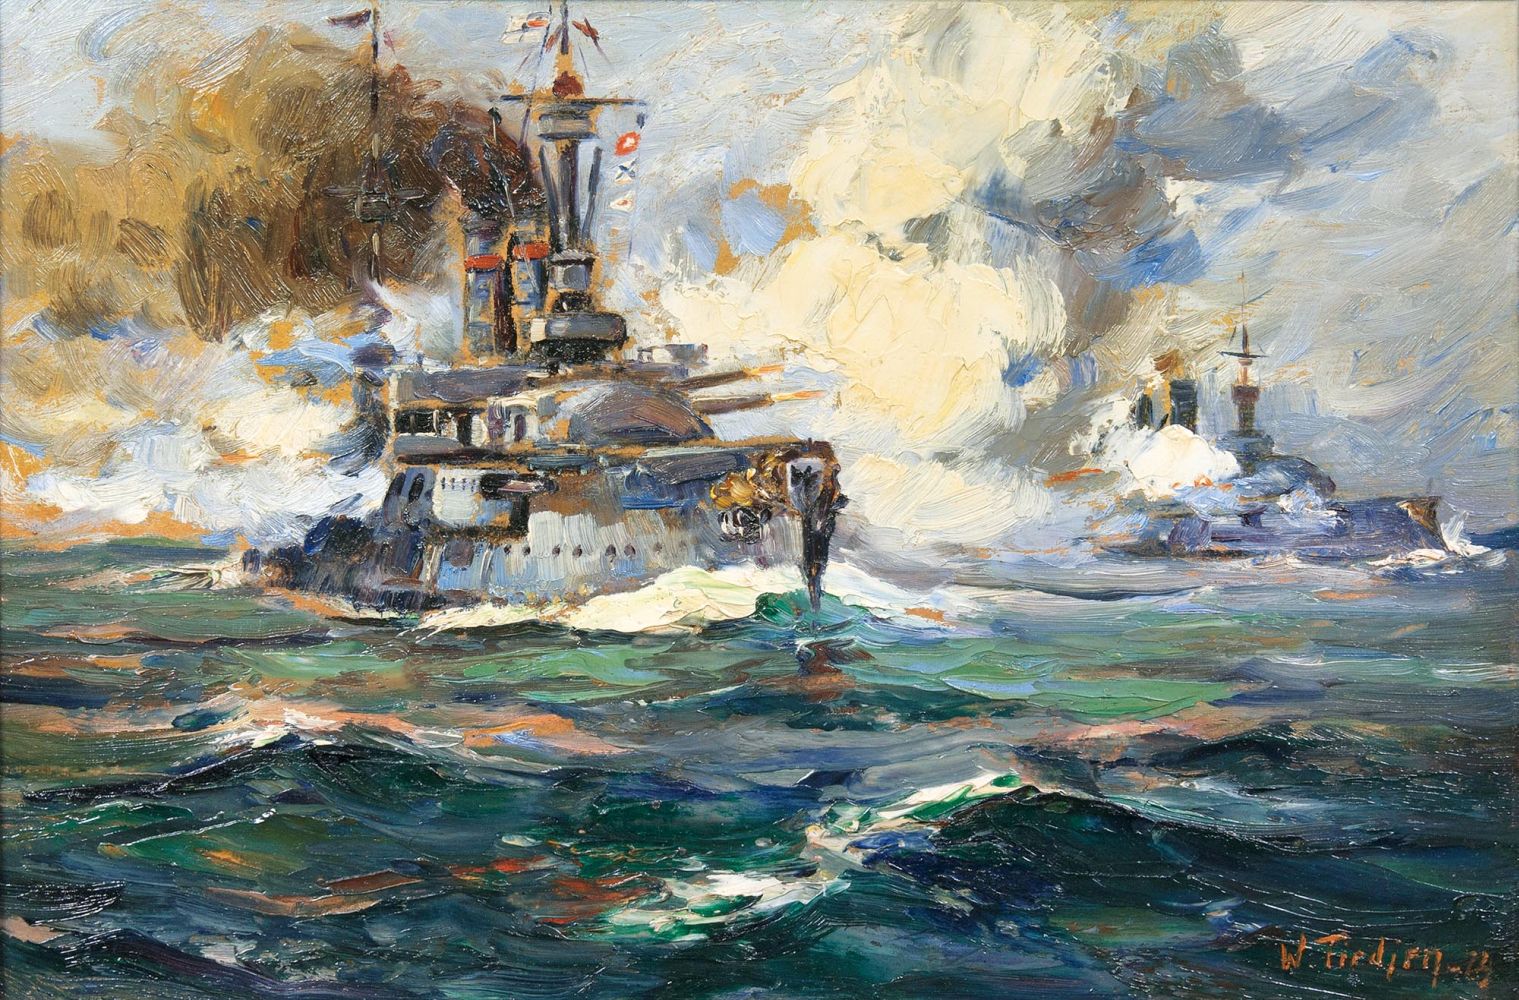 Seeschlacht im I. Weltkrieg